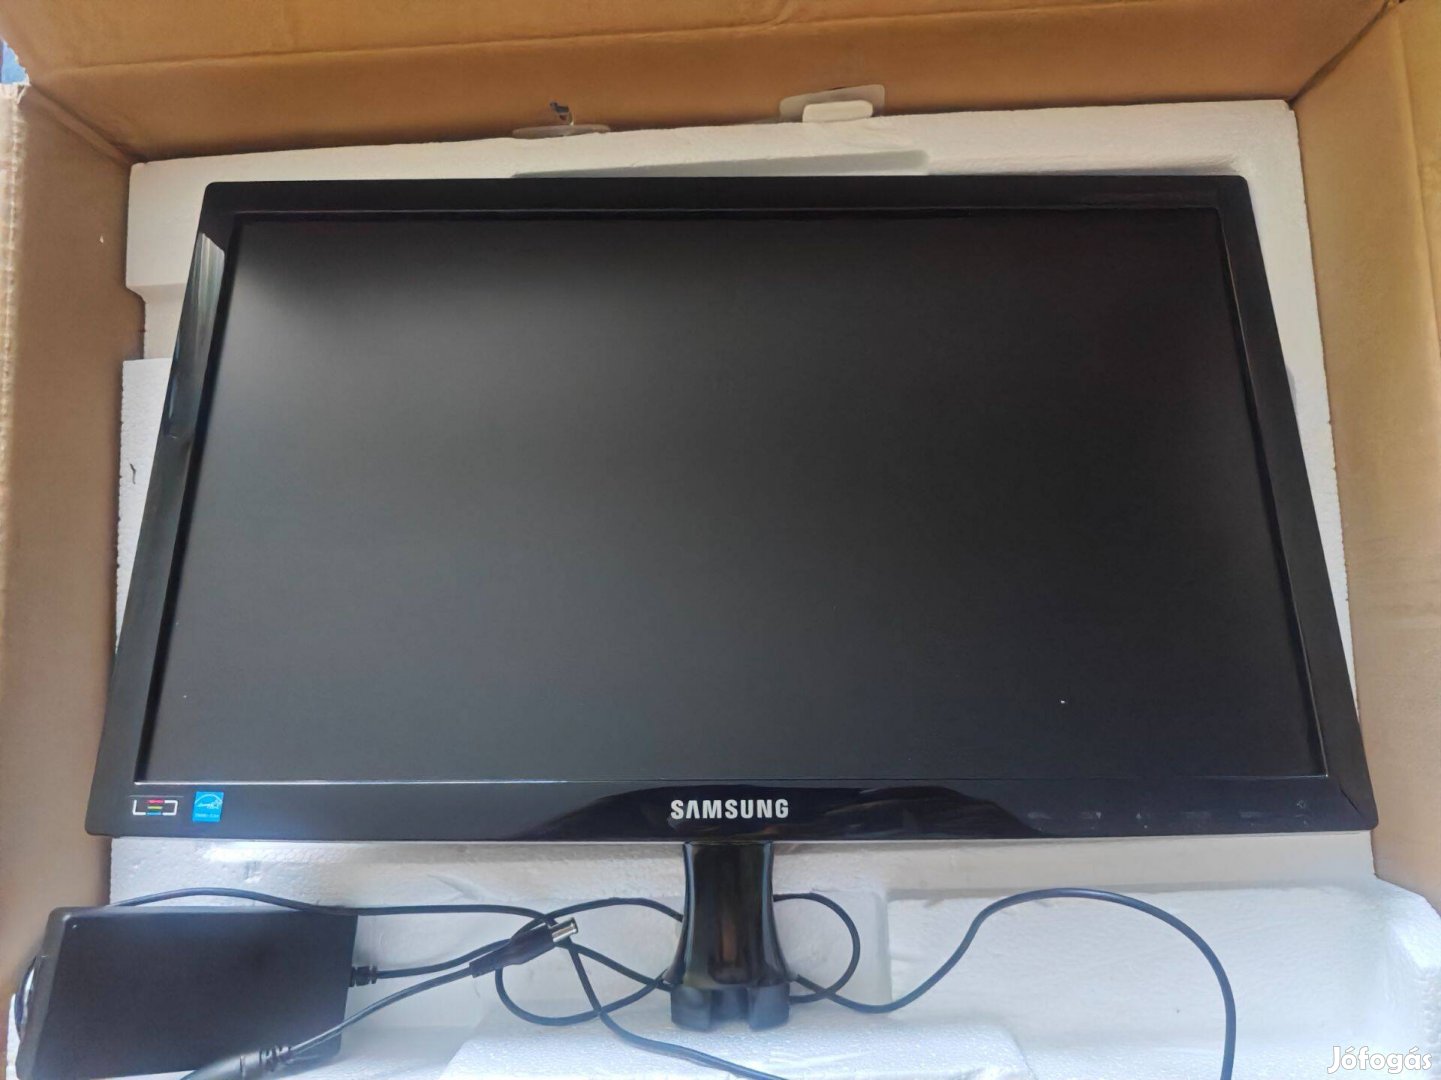 Samsung S19B150N led monitor